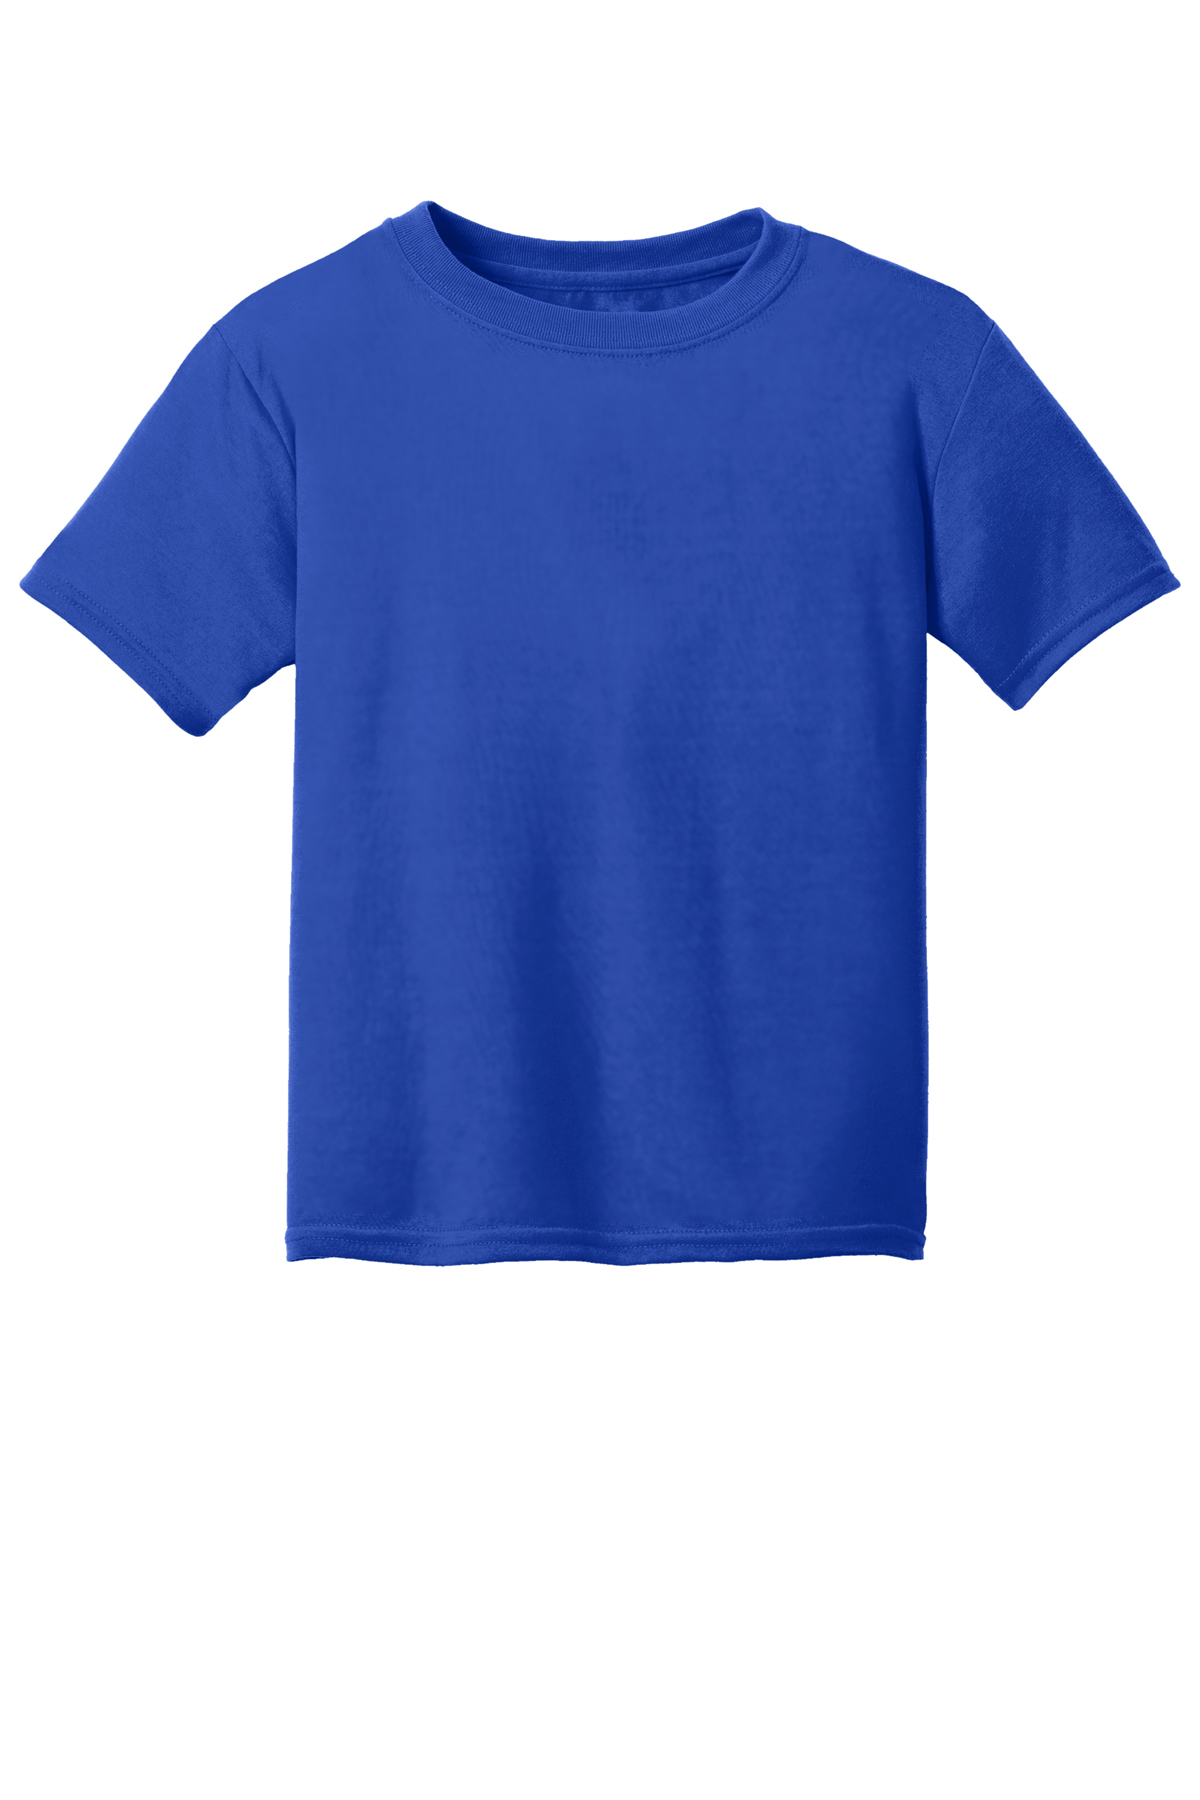 Gildan Boys Youth XL Louisville Slugger Tee Shirt Blue